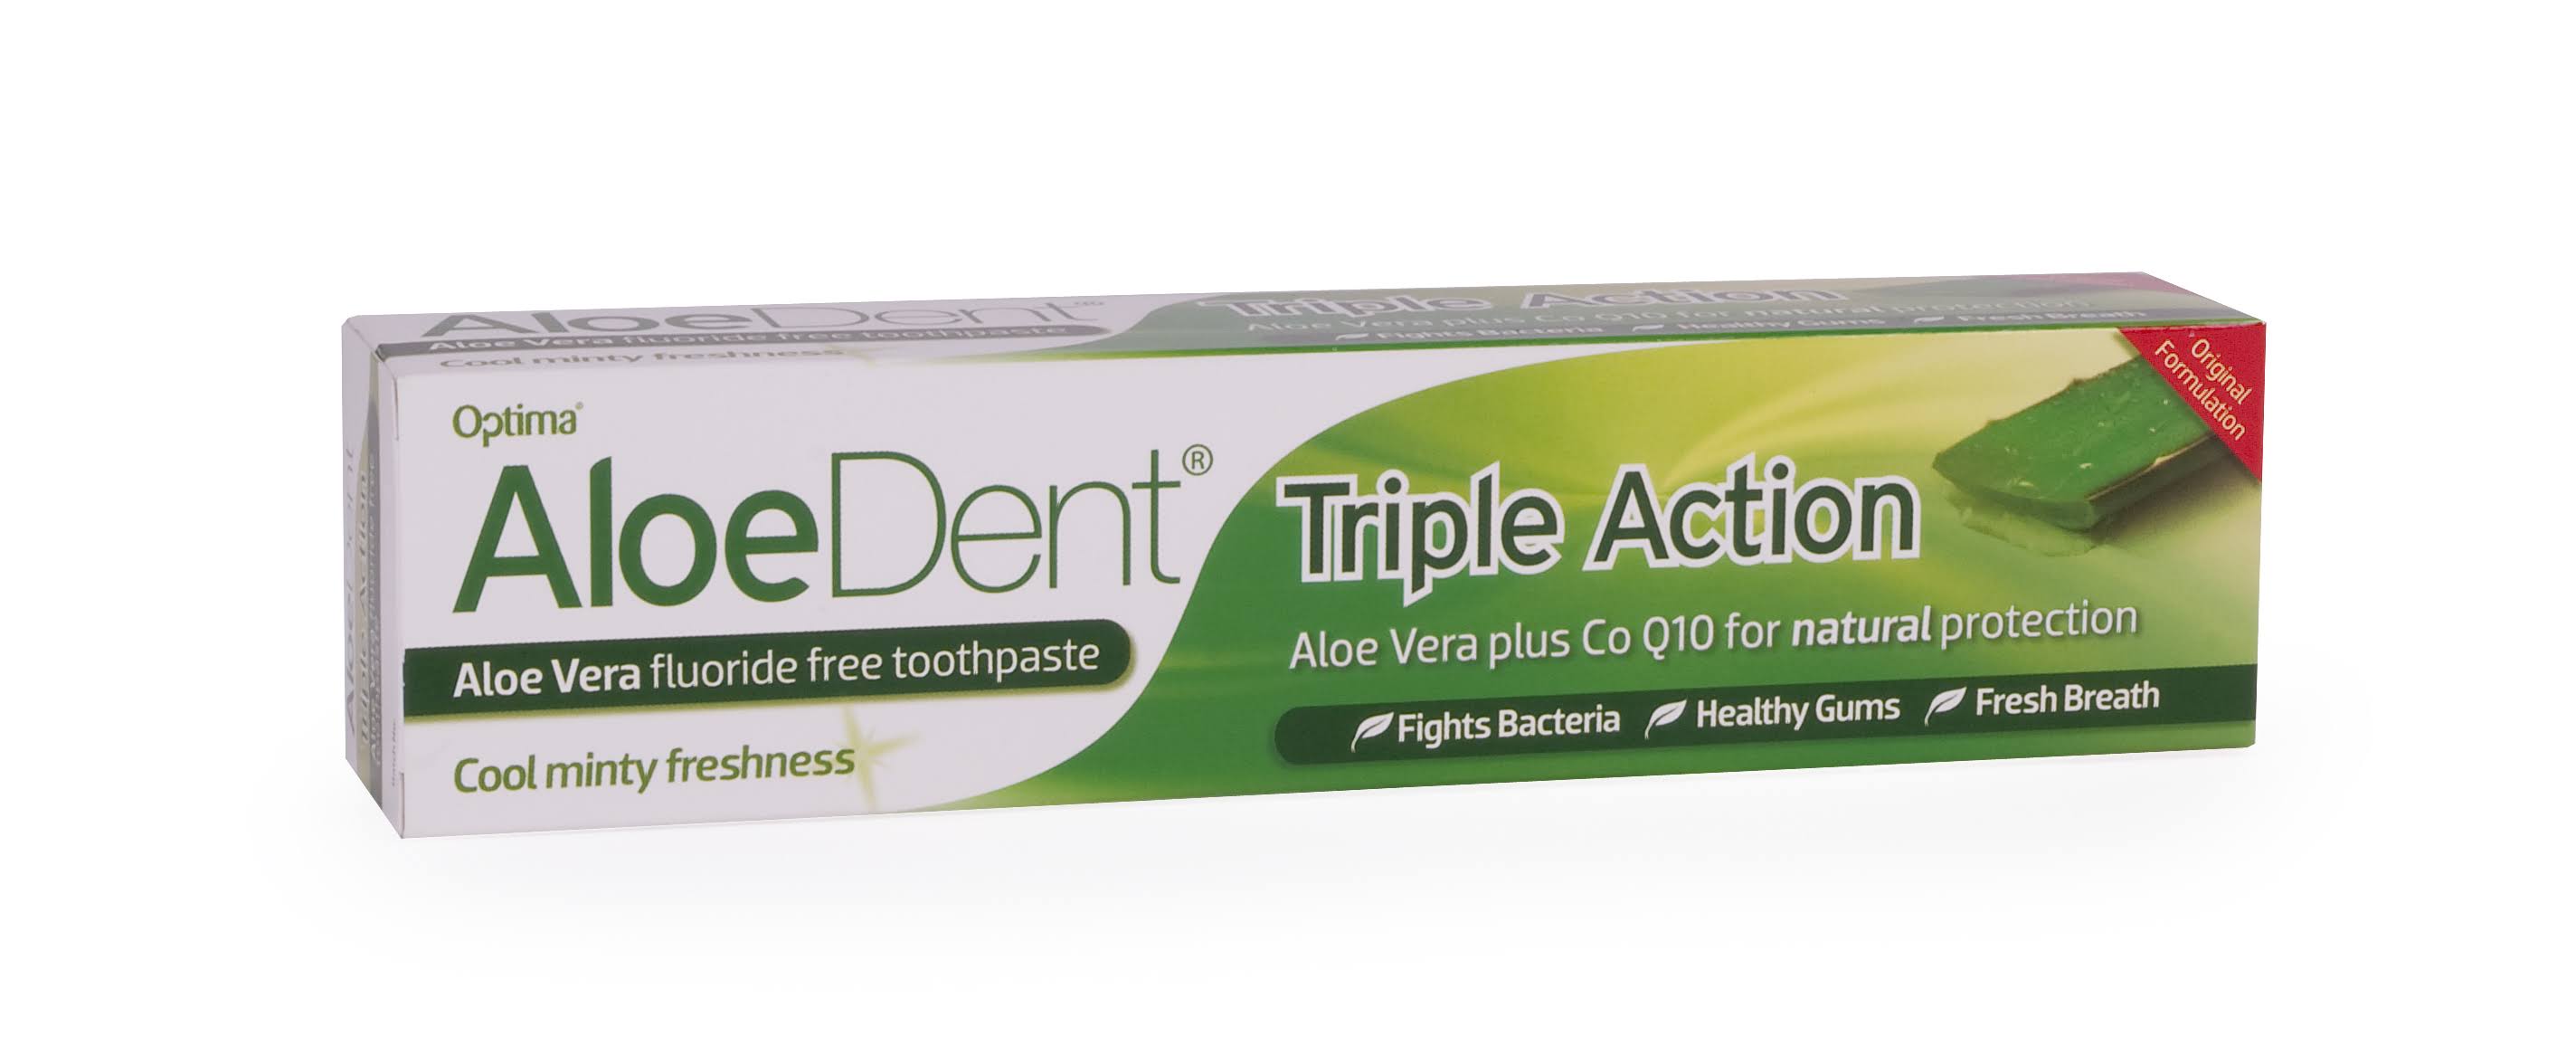 Aloe Dent 100ml Triple Action Toothpaste